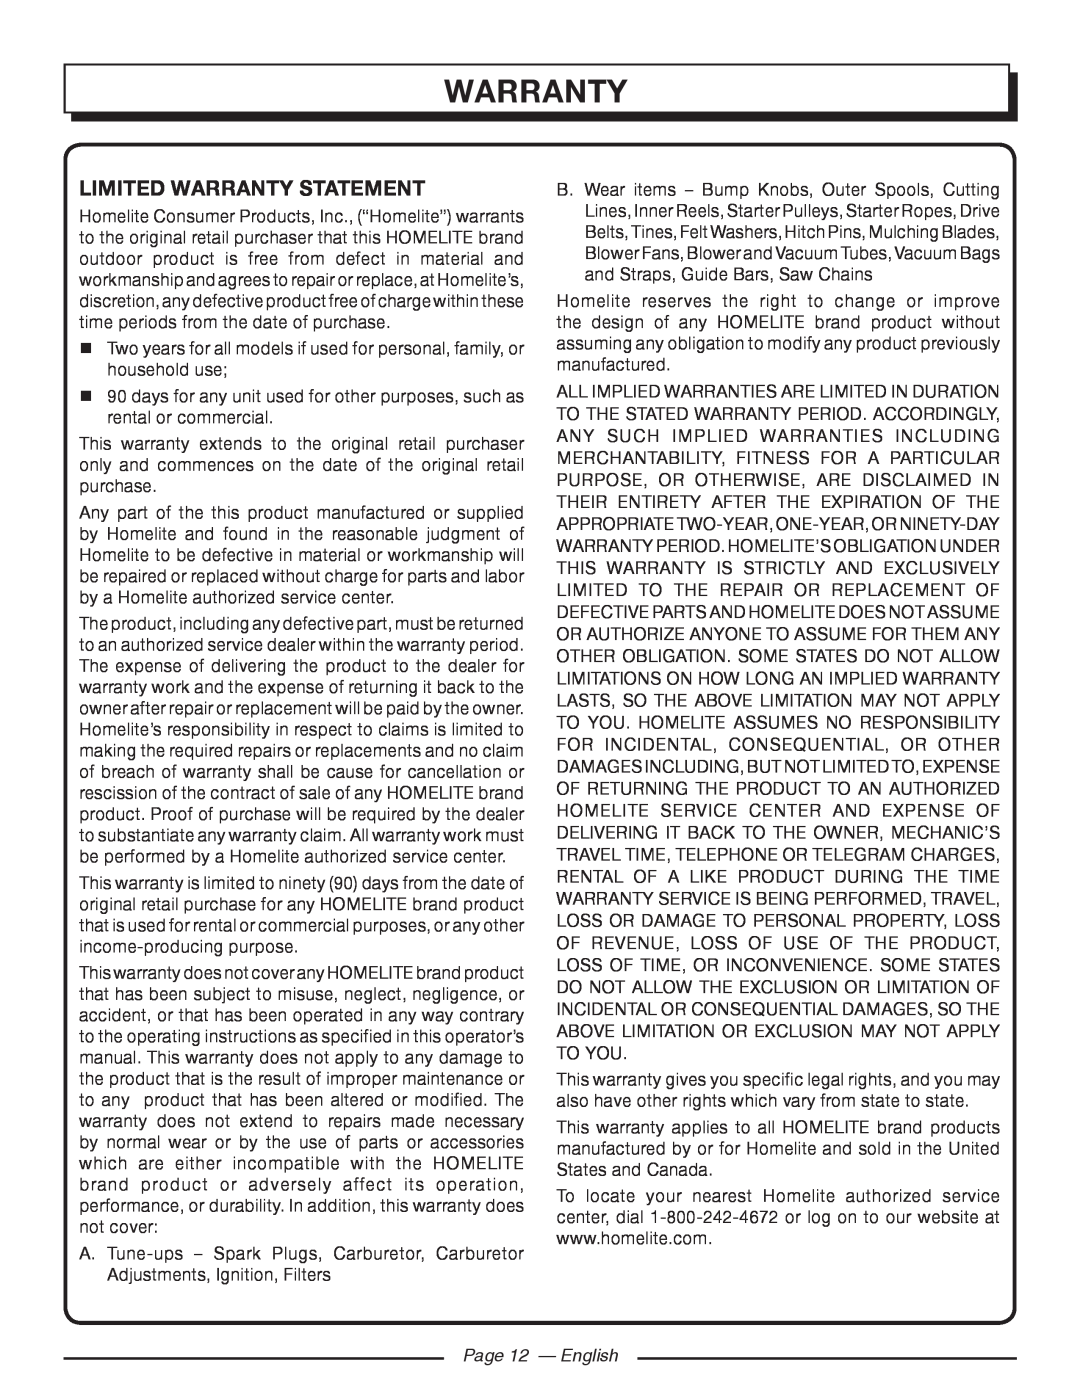 Homelite 26SS UT22650, 26CS UT22600 manuel dutilisation Limited Warranty Statement, Page 12 - English 